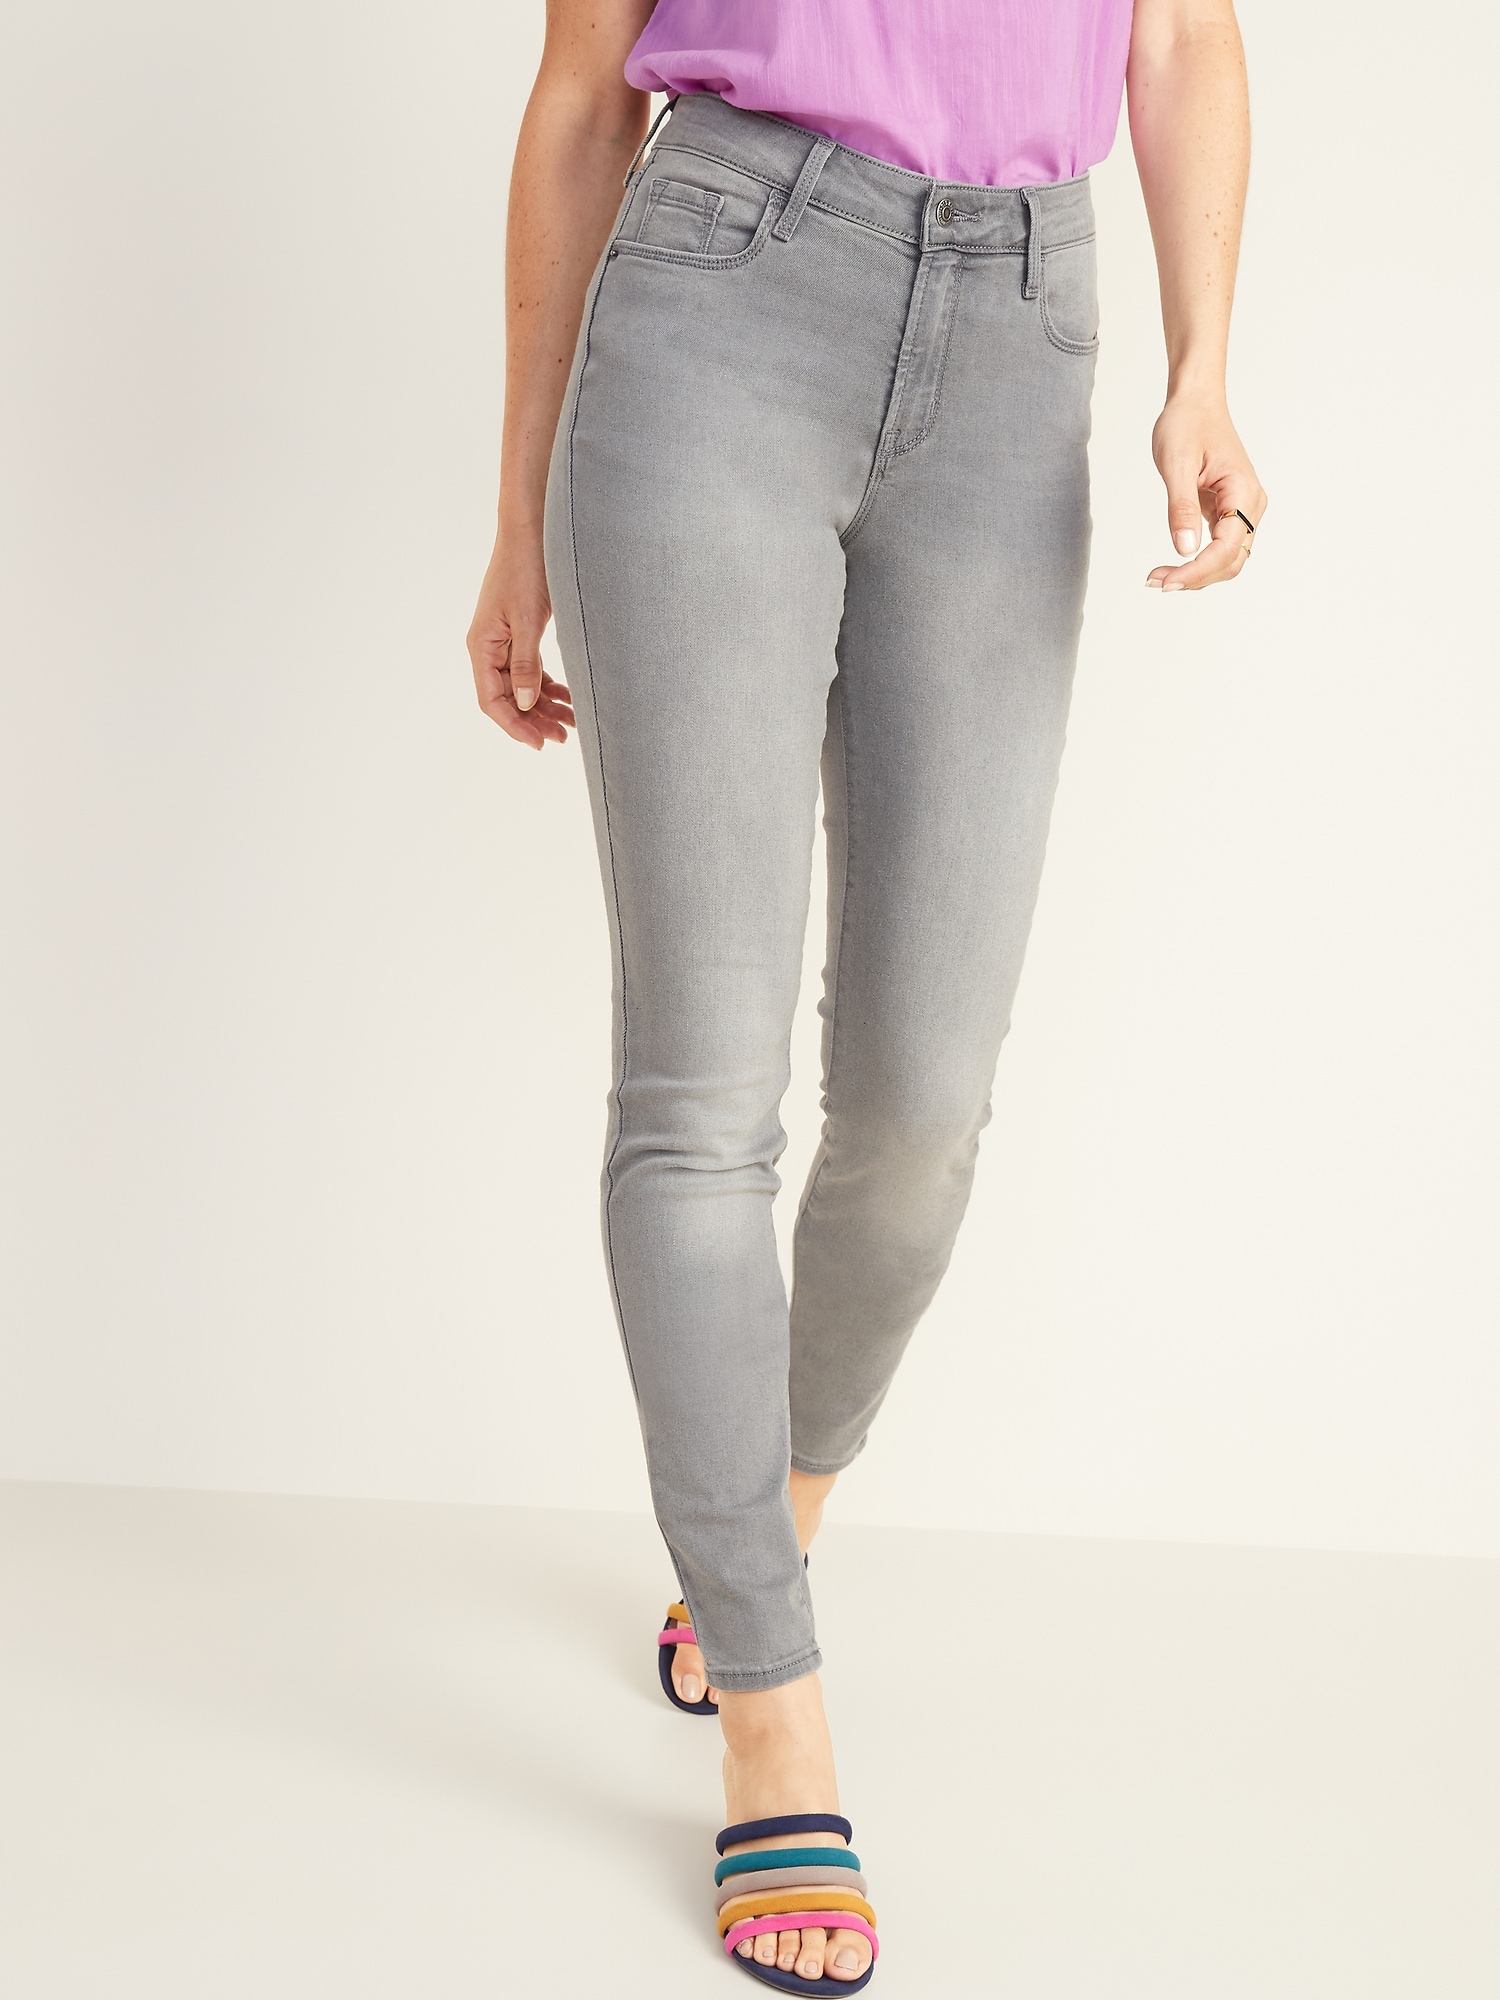 rockstar jeans online shopping